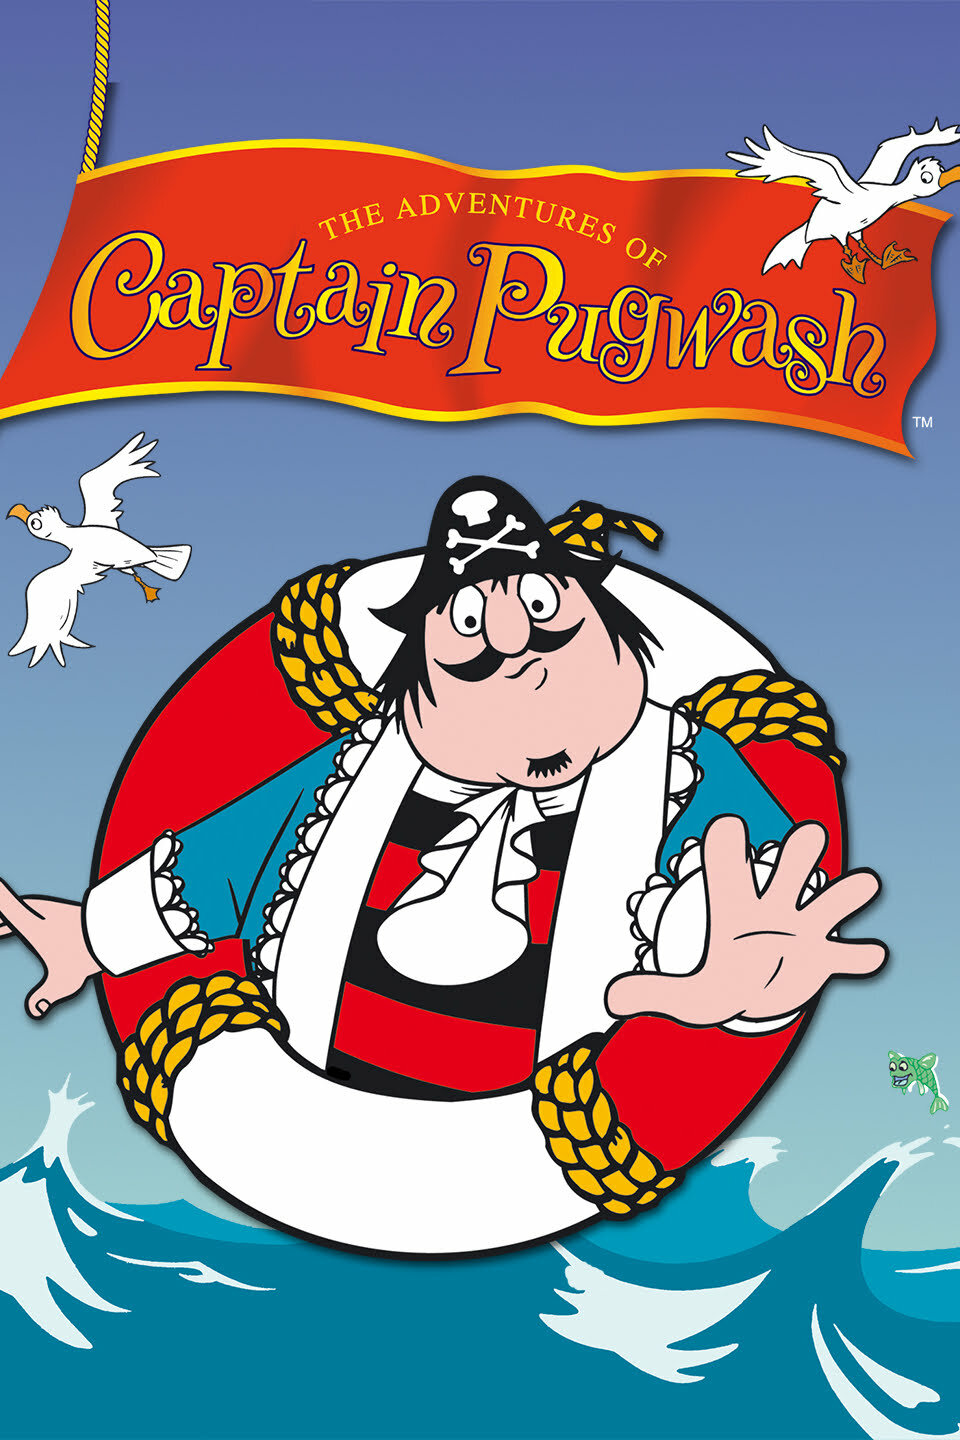 The Adventures of Captain Pugwash ne zaman